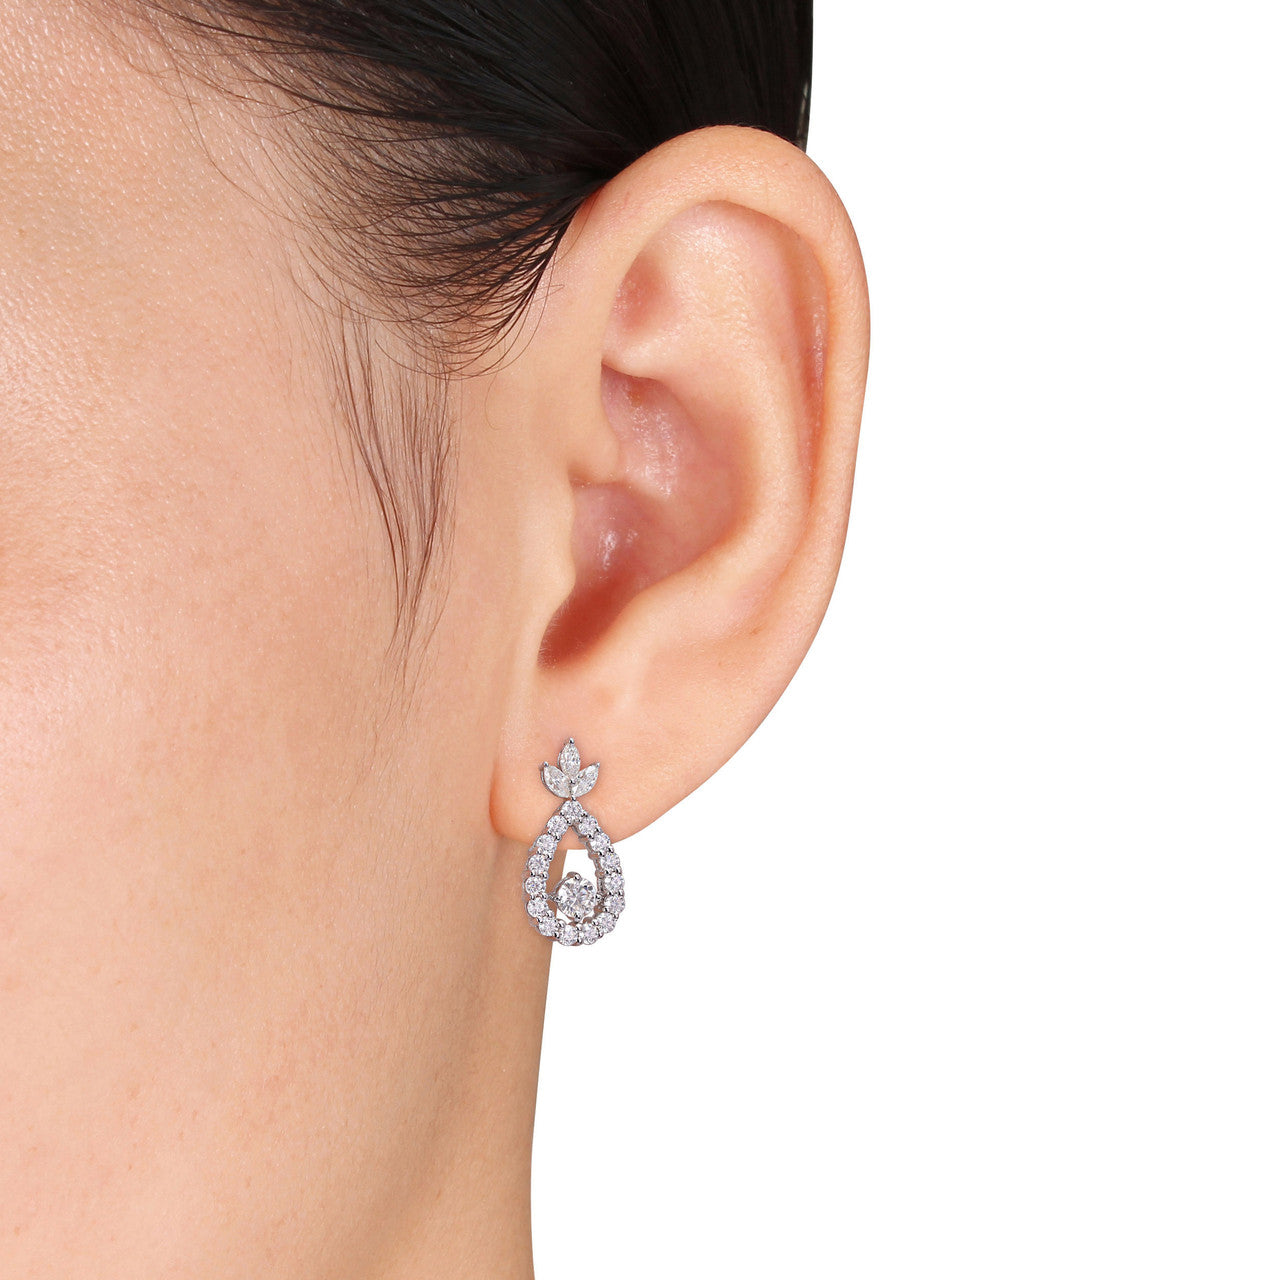 Ice Jewellery 2 CT Created Moissanite-White Flower Dangle Earrings in Sterling Silver - 75000005756 | Ice Jewellery Australia